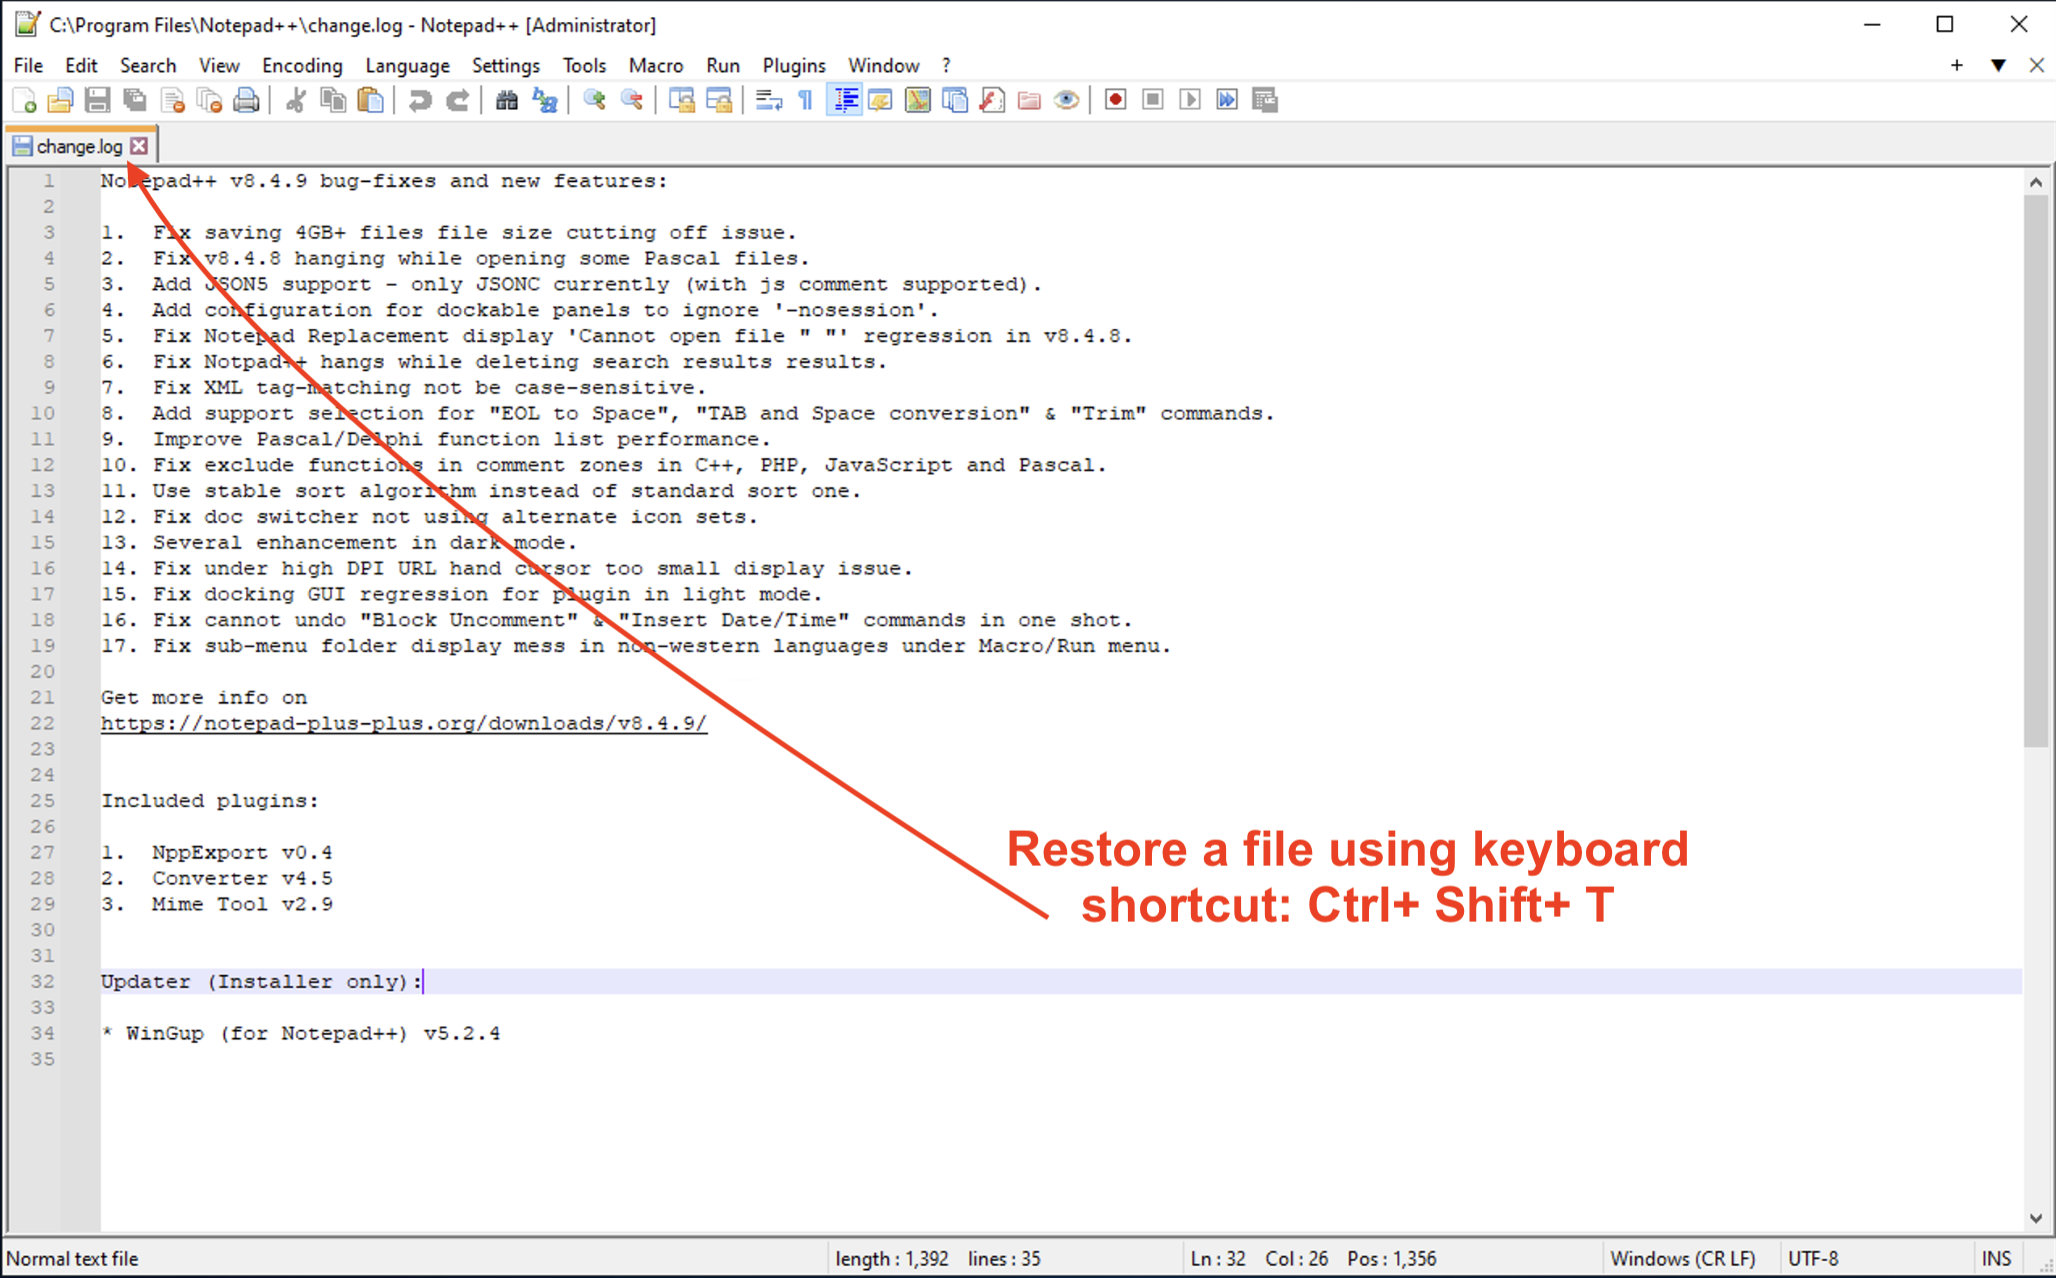 Notepad++ restored closed file using keyboard shortcut